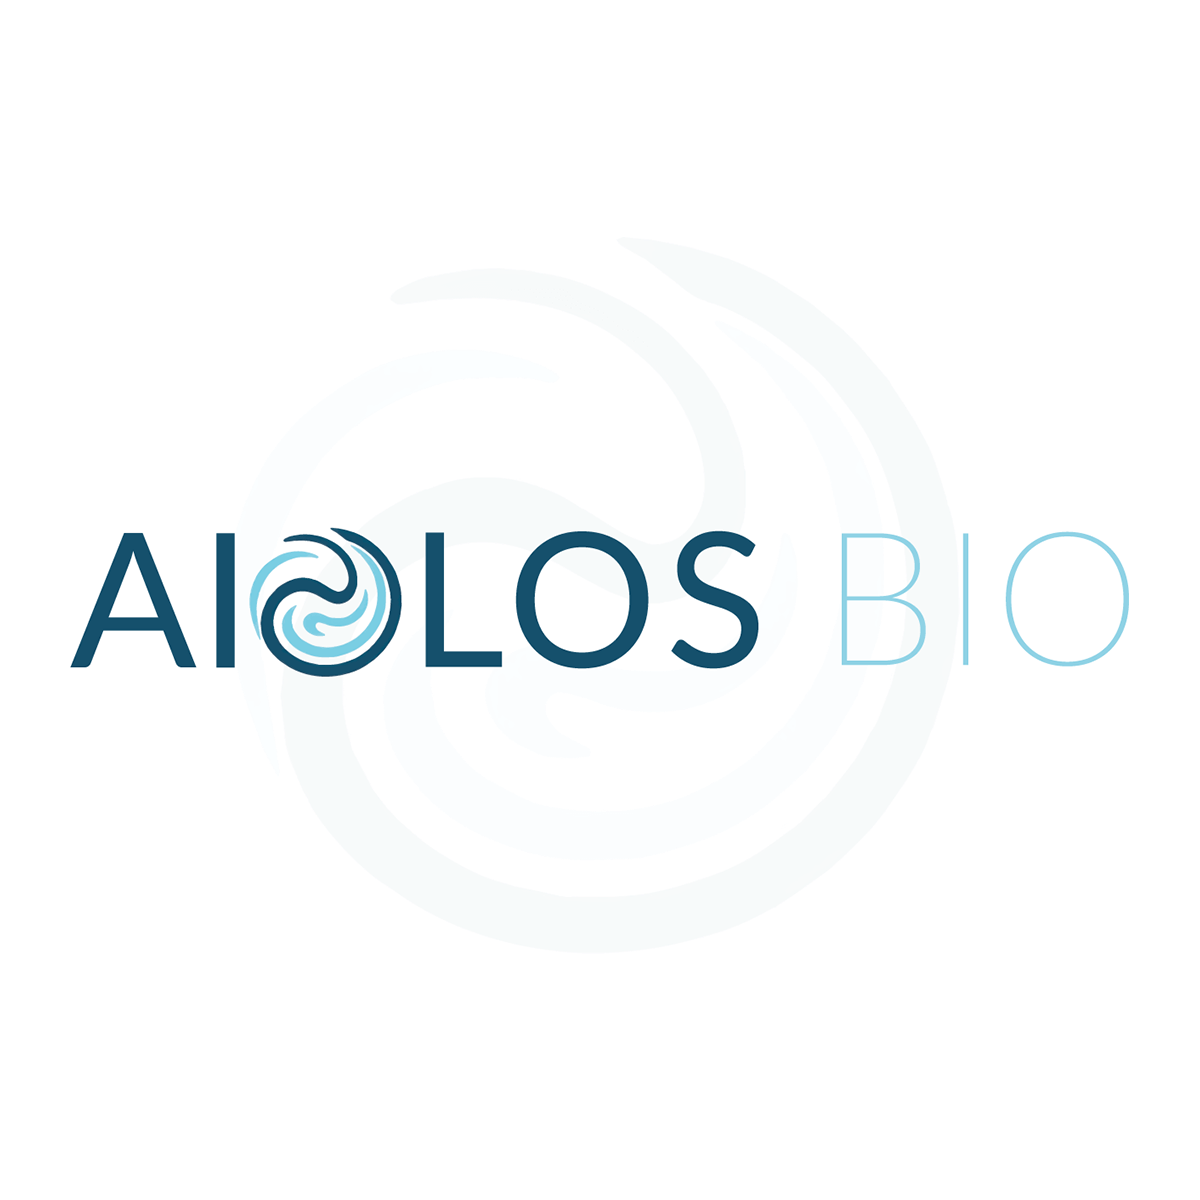 Aiolos Bio logo